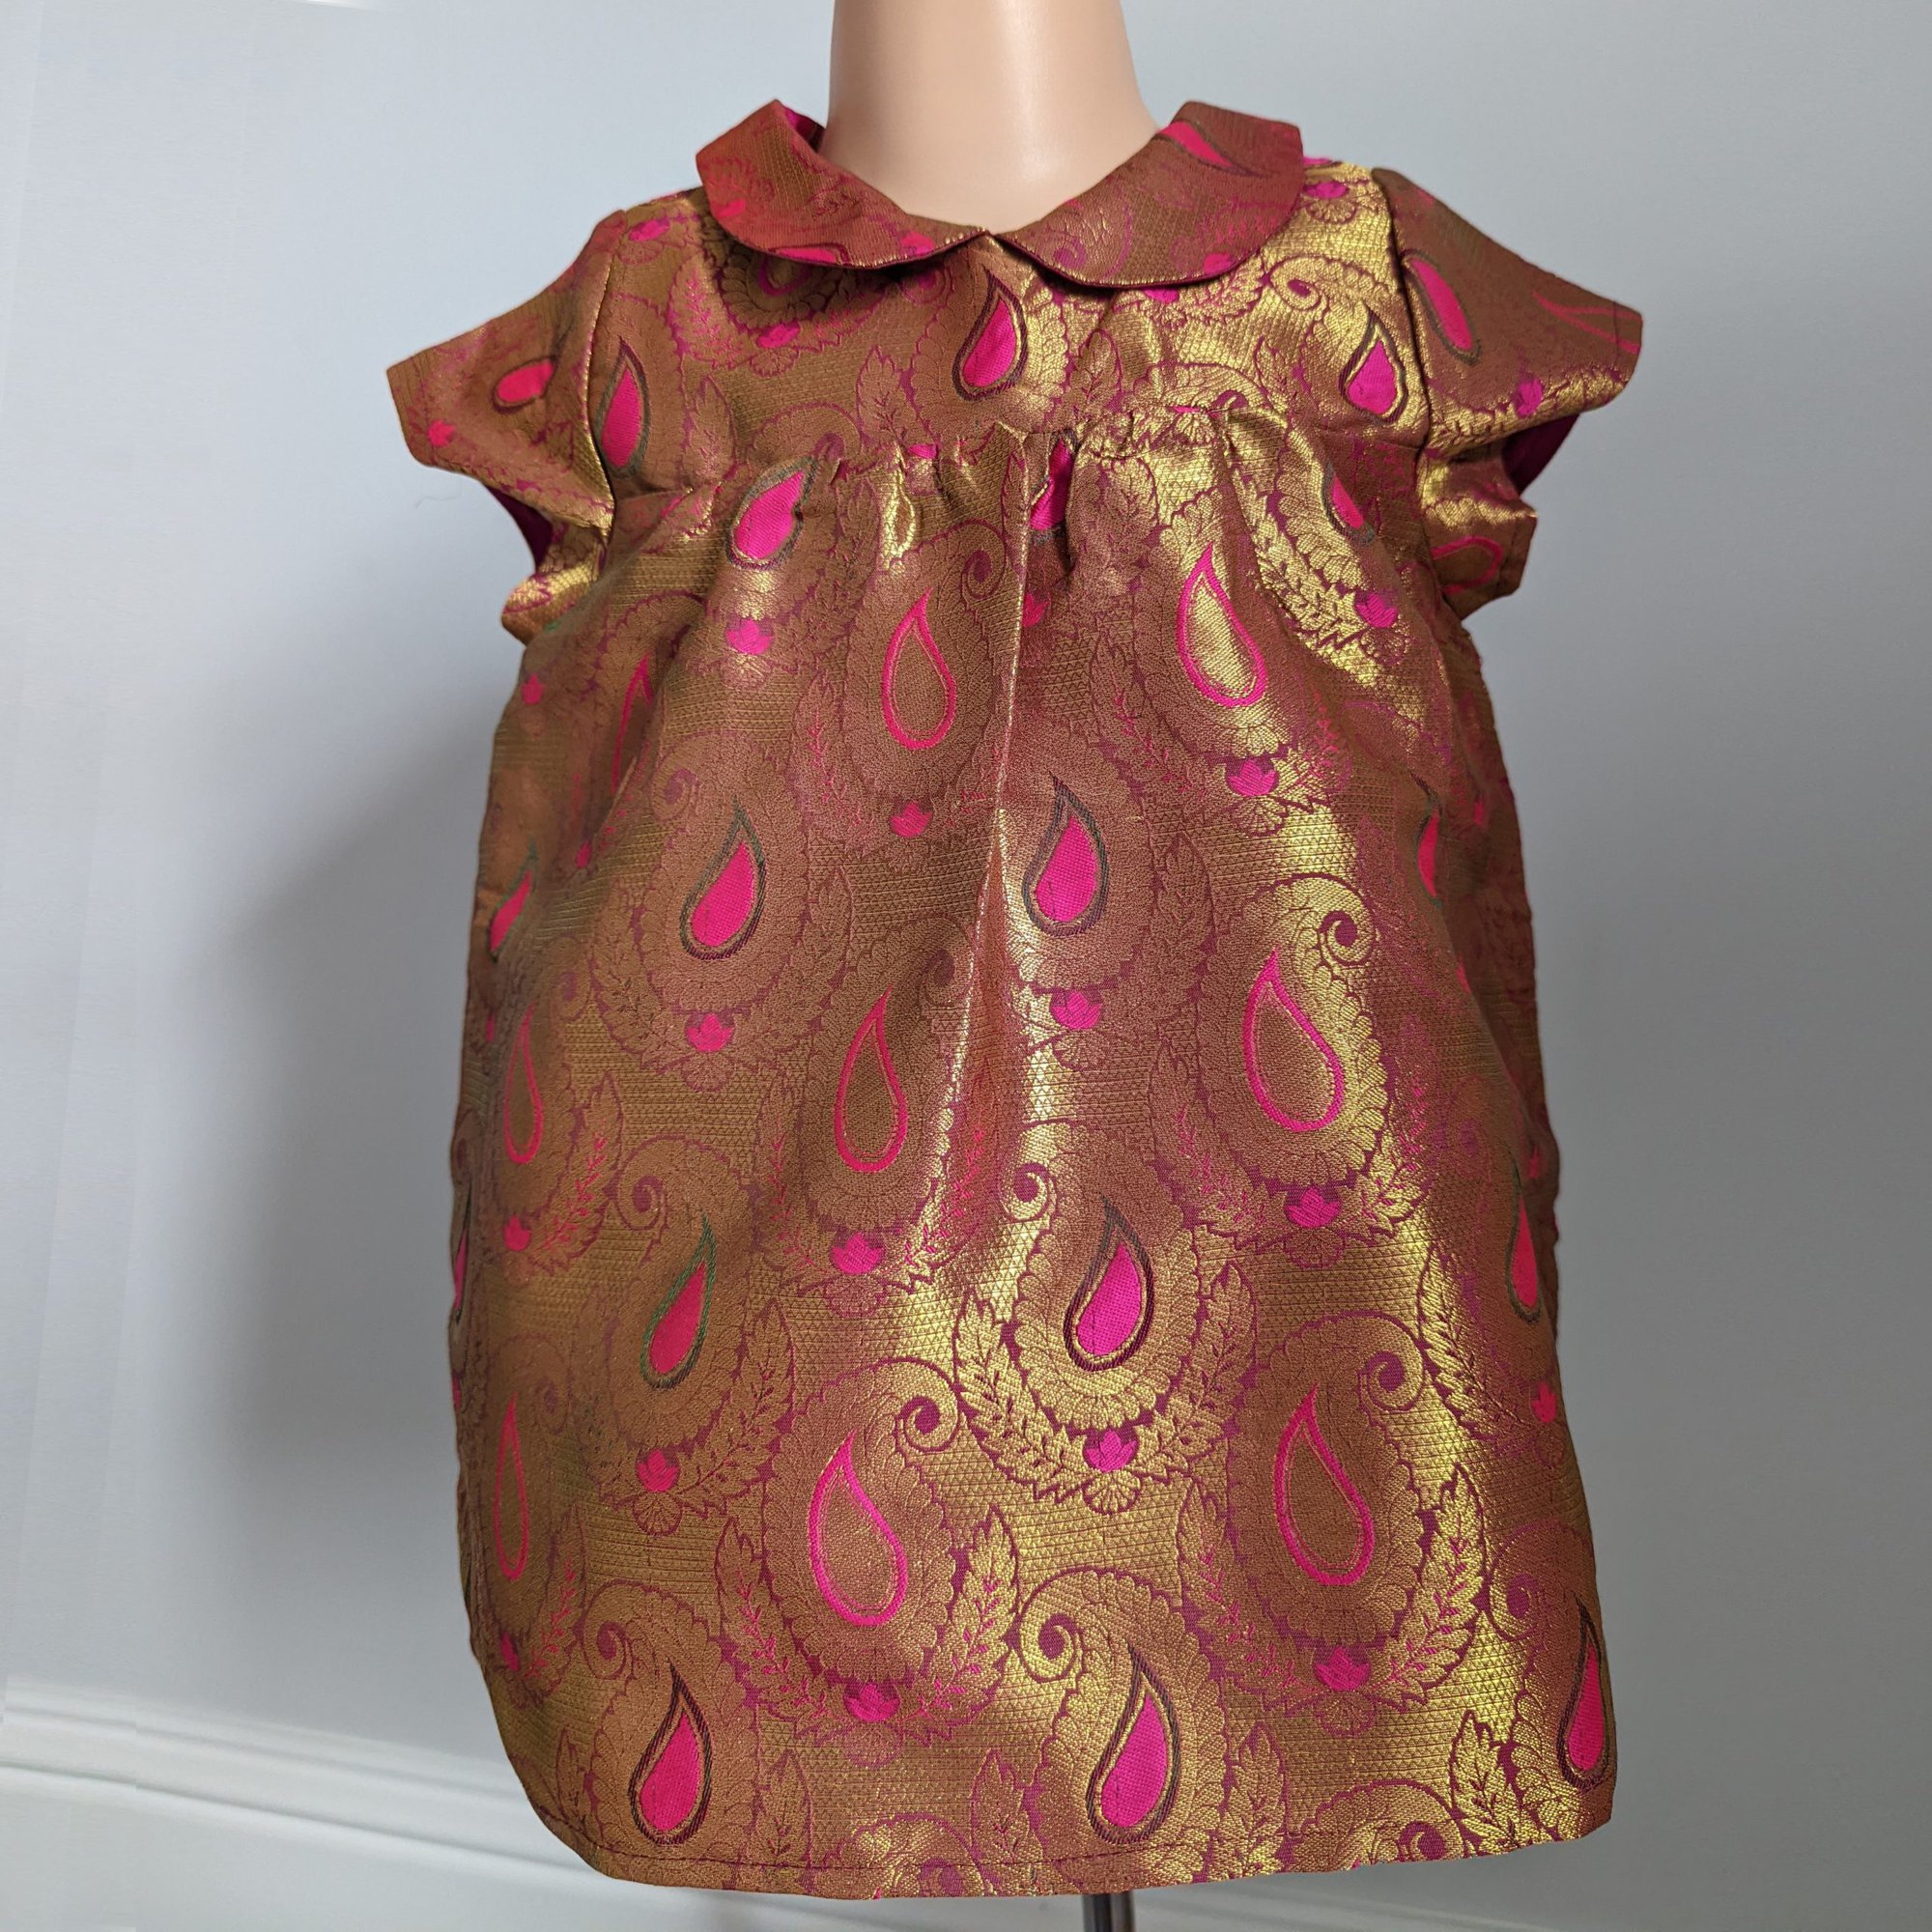 Buy Hand Knitted Baby Girl Christening Dress, 6-9